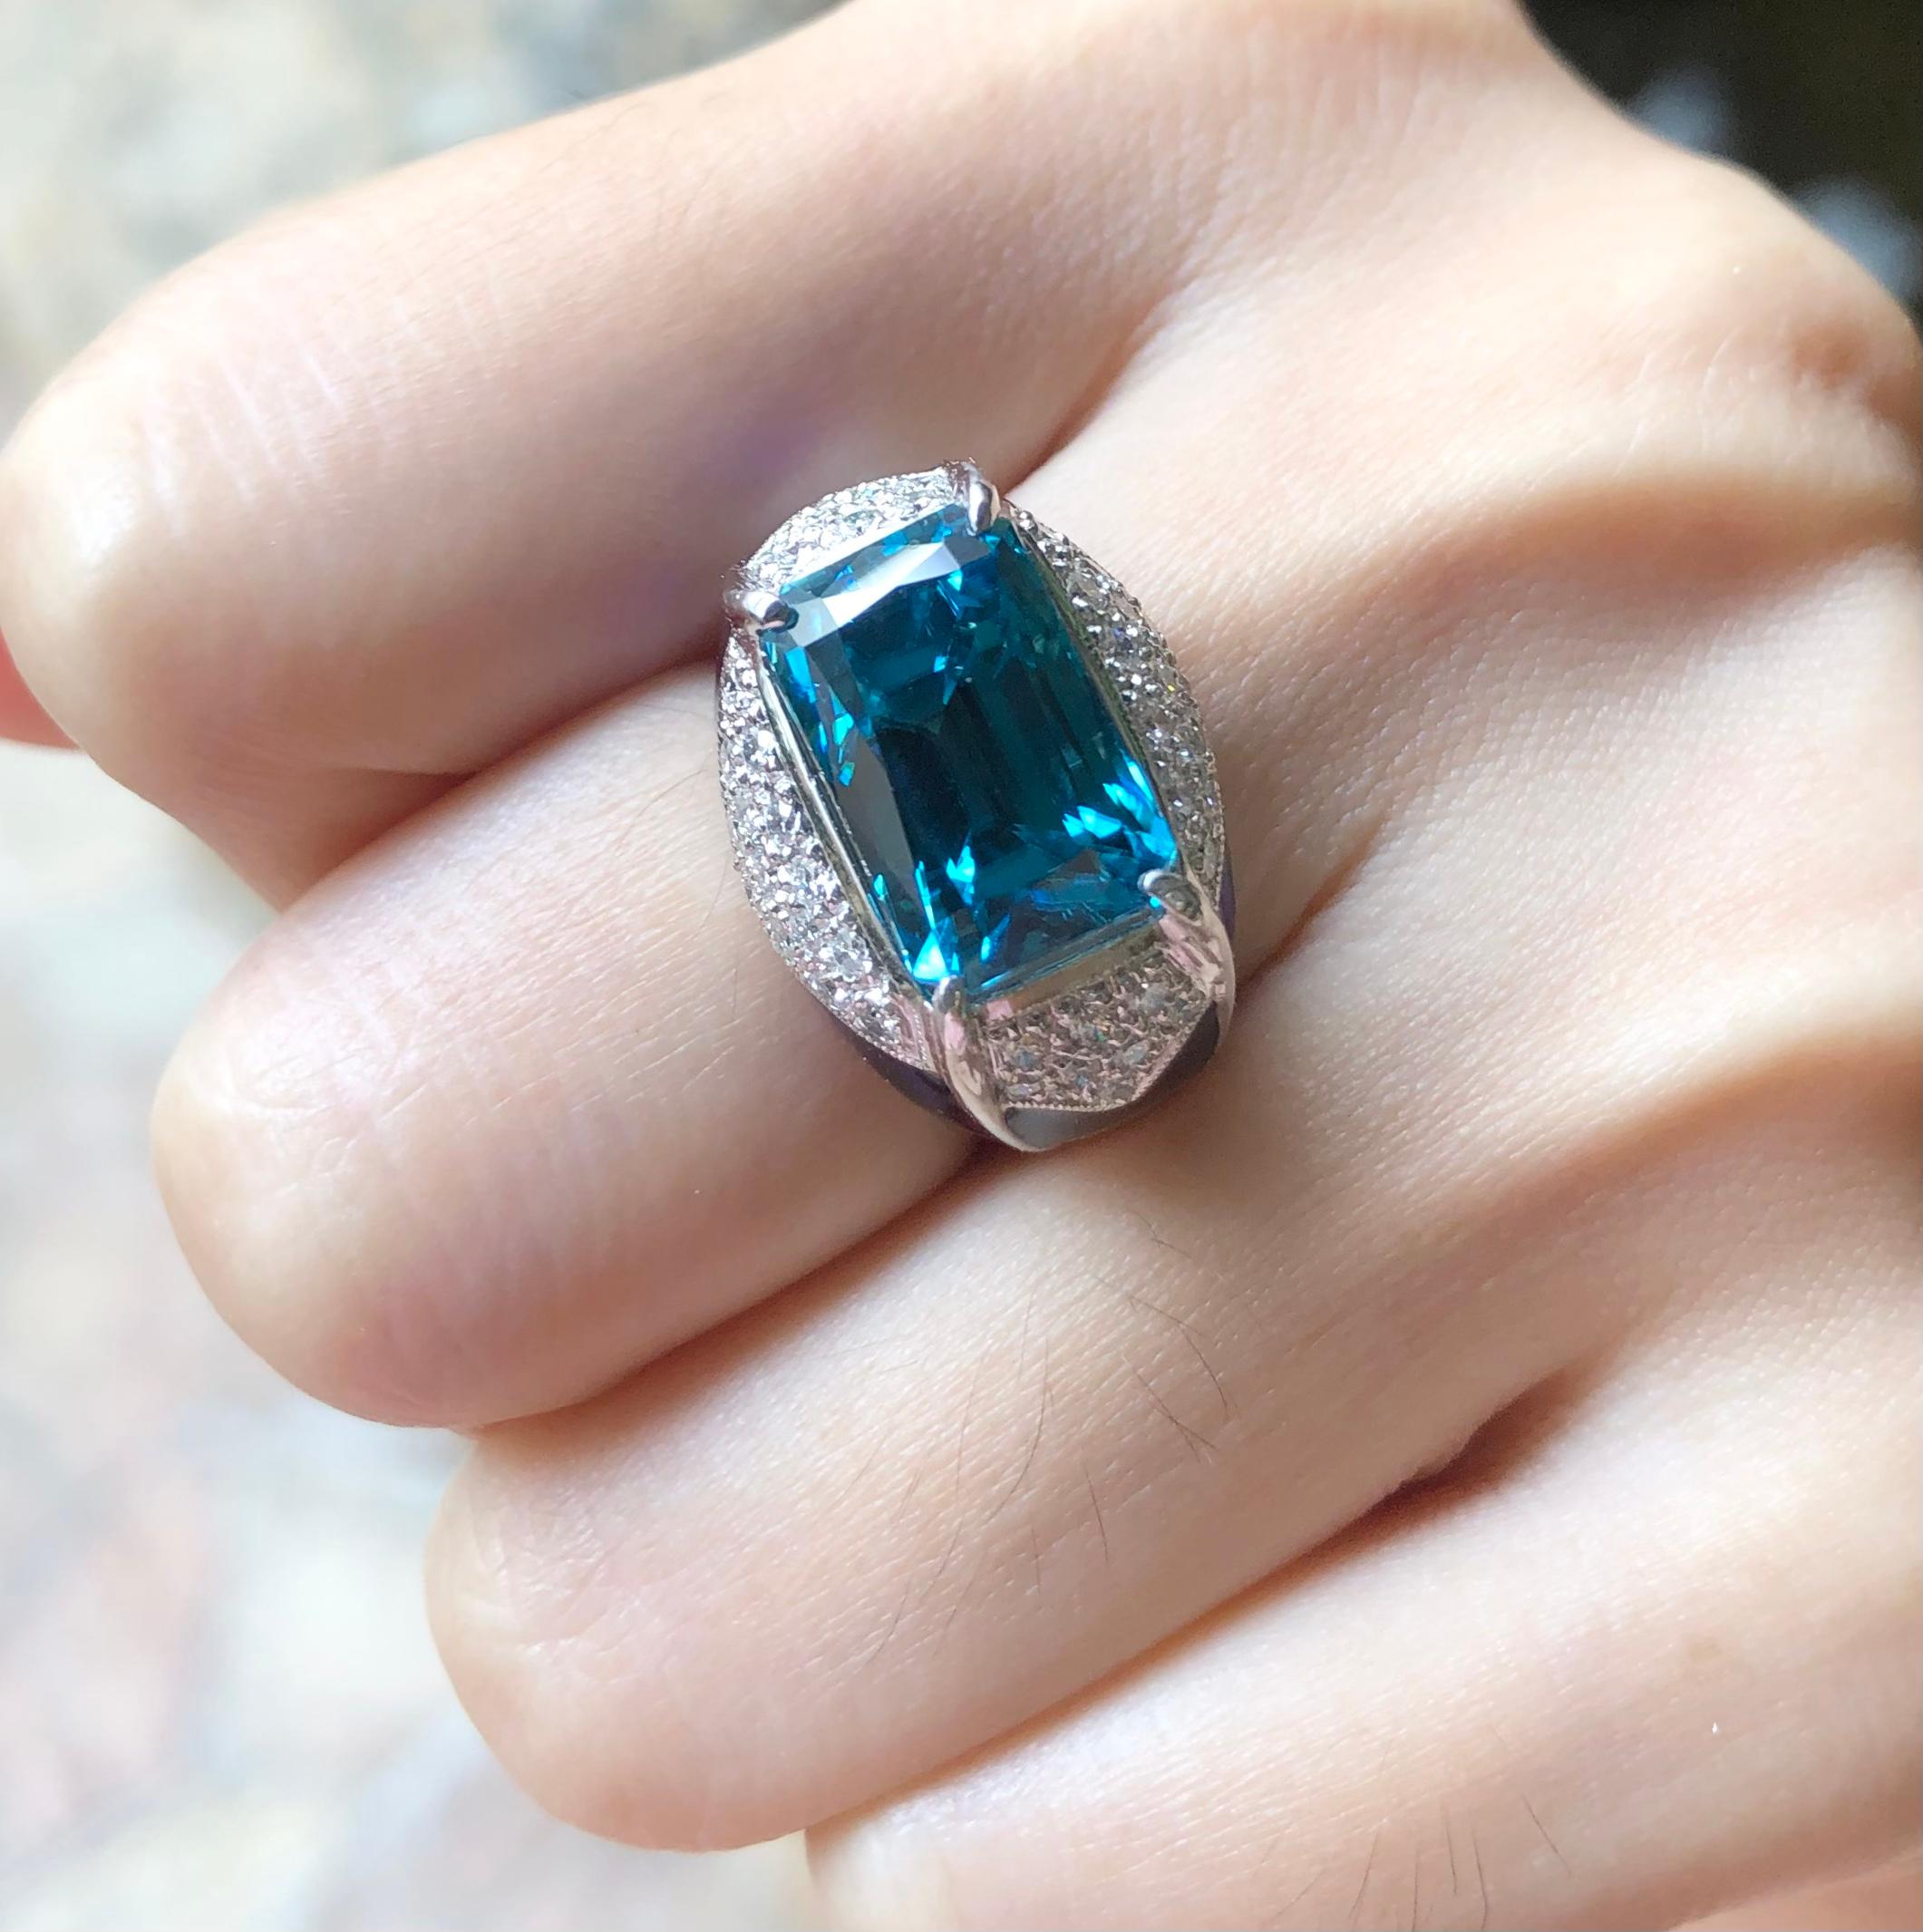 Blue Zircon 12.18 carats with Diamond 0.63 carat Ring set in 18 Karat White Gold Settings

Width:  1.3 cm 
Length: 1.4 cm
Ring Size: 50
Total Weight: 11.47 grams

Blue Zircon
Width:  1.3 cm 
Length: 0.8 cm

